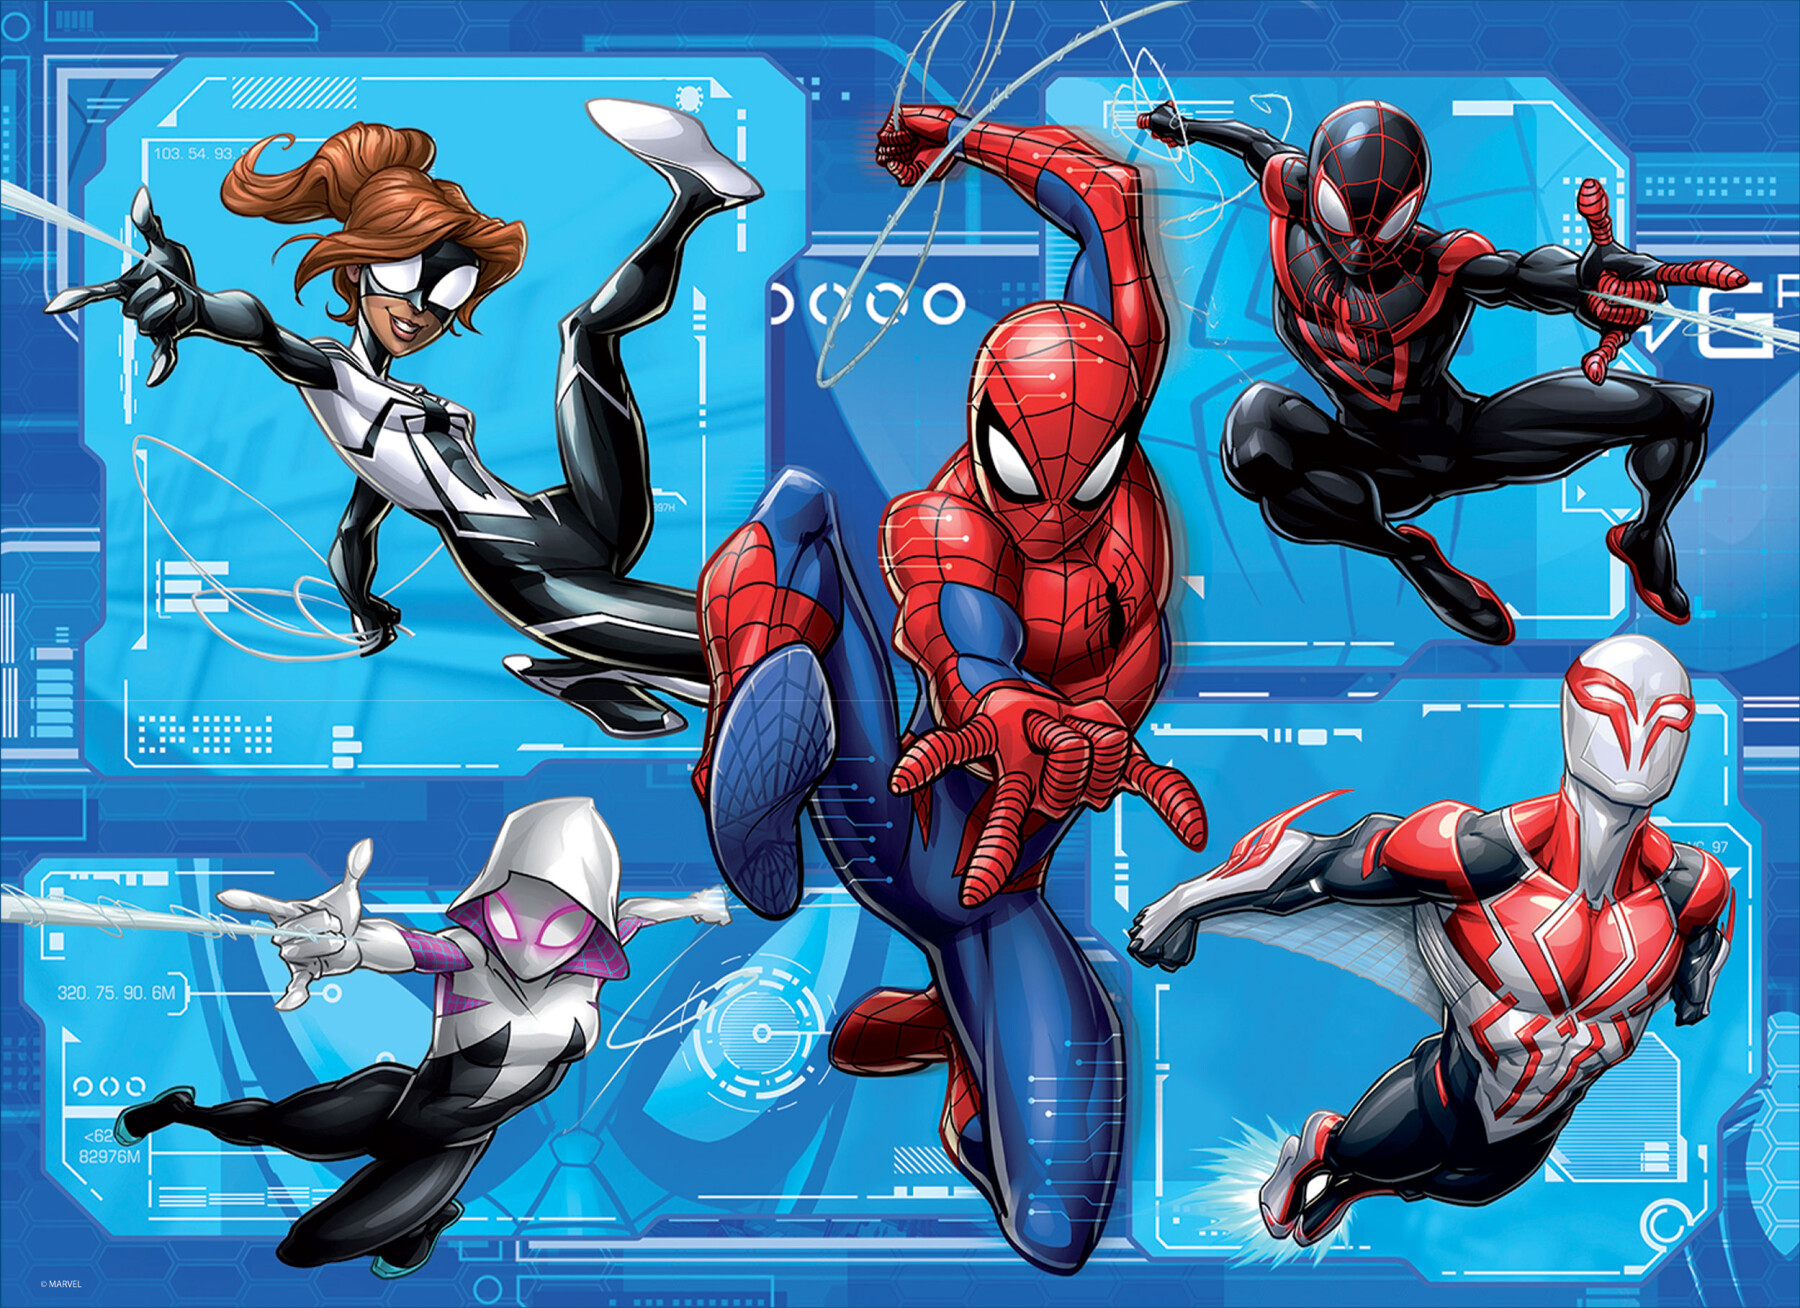 Marvel puzzle df maxi floor 108  spiderman - LISCIANI, Avengers, Spiderman